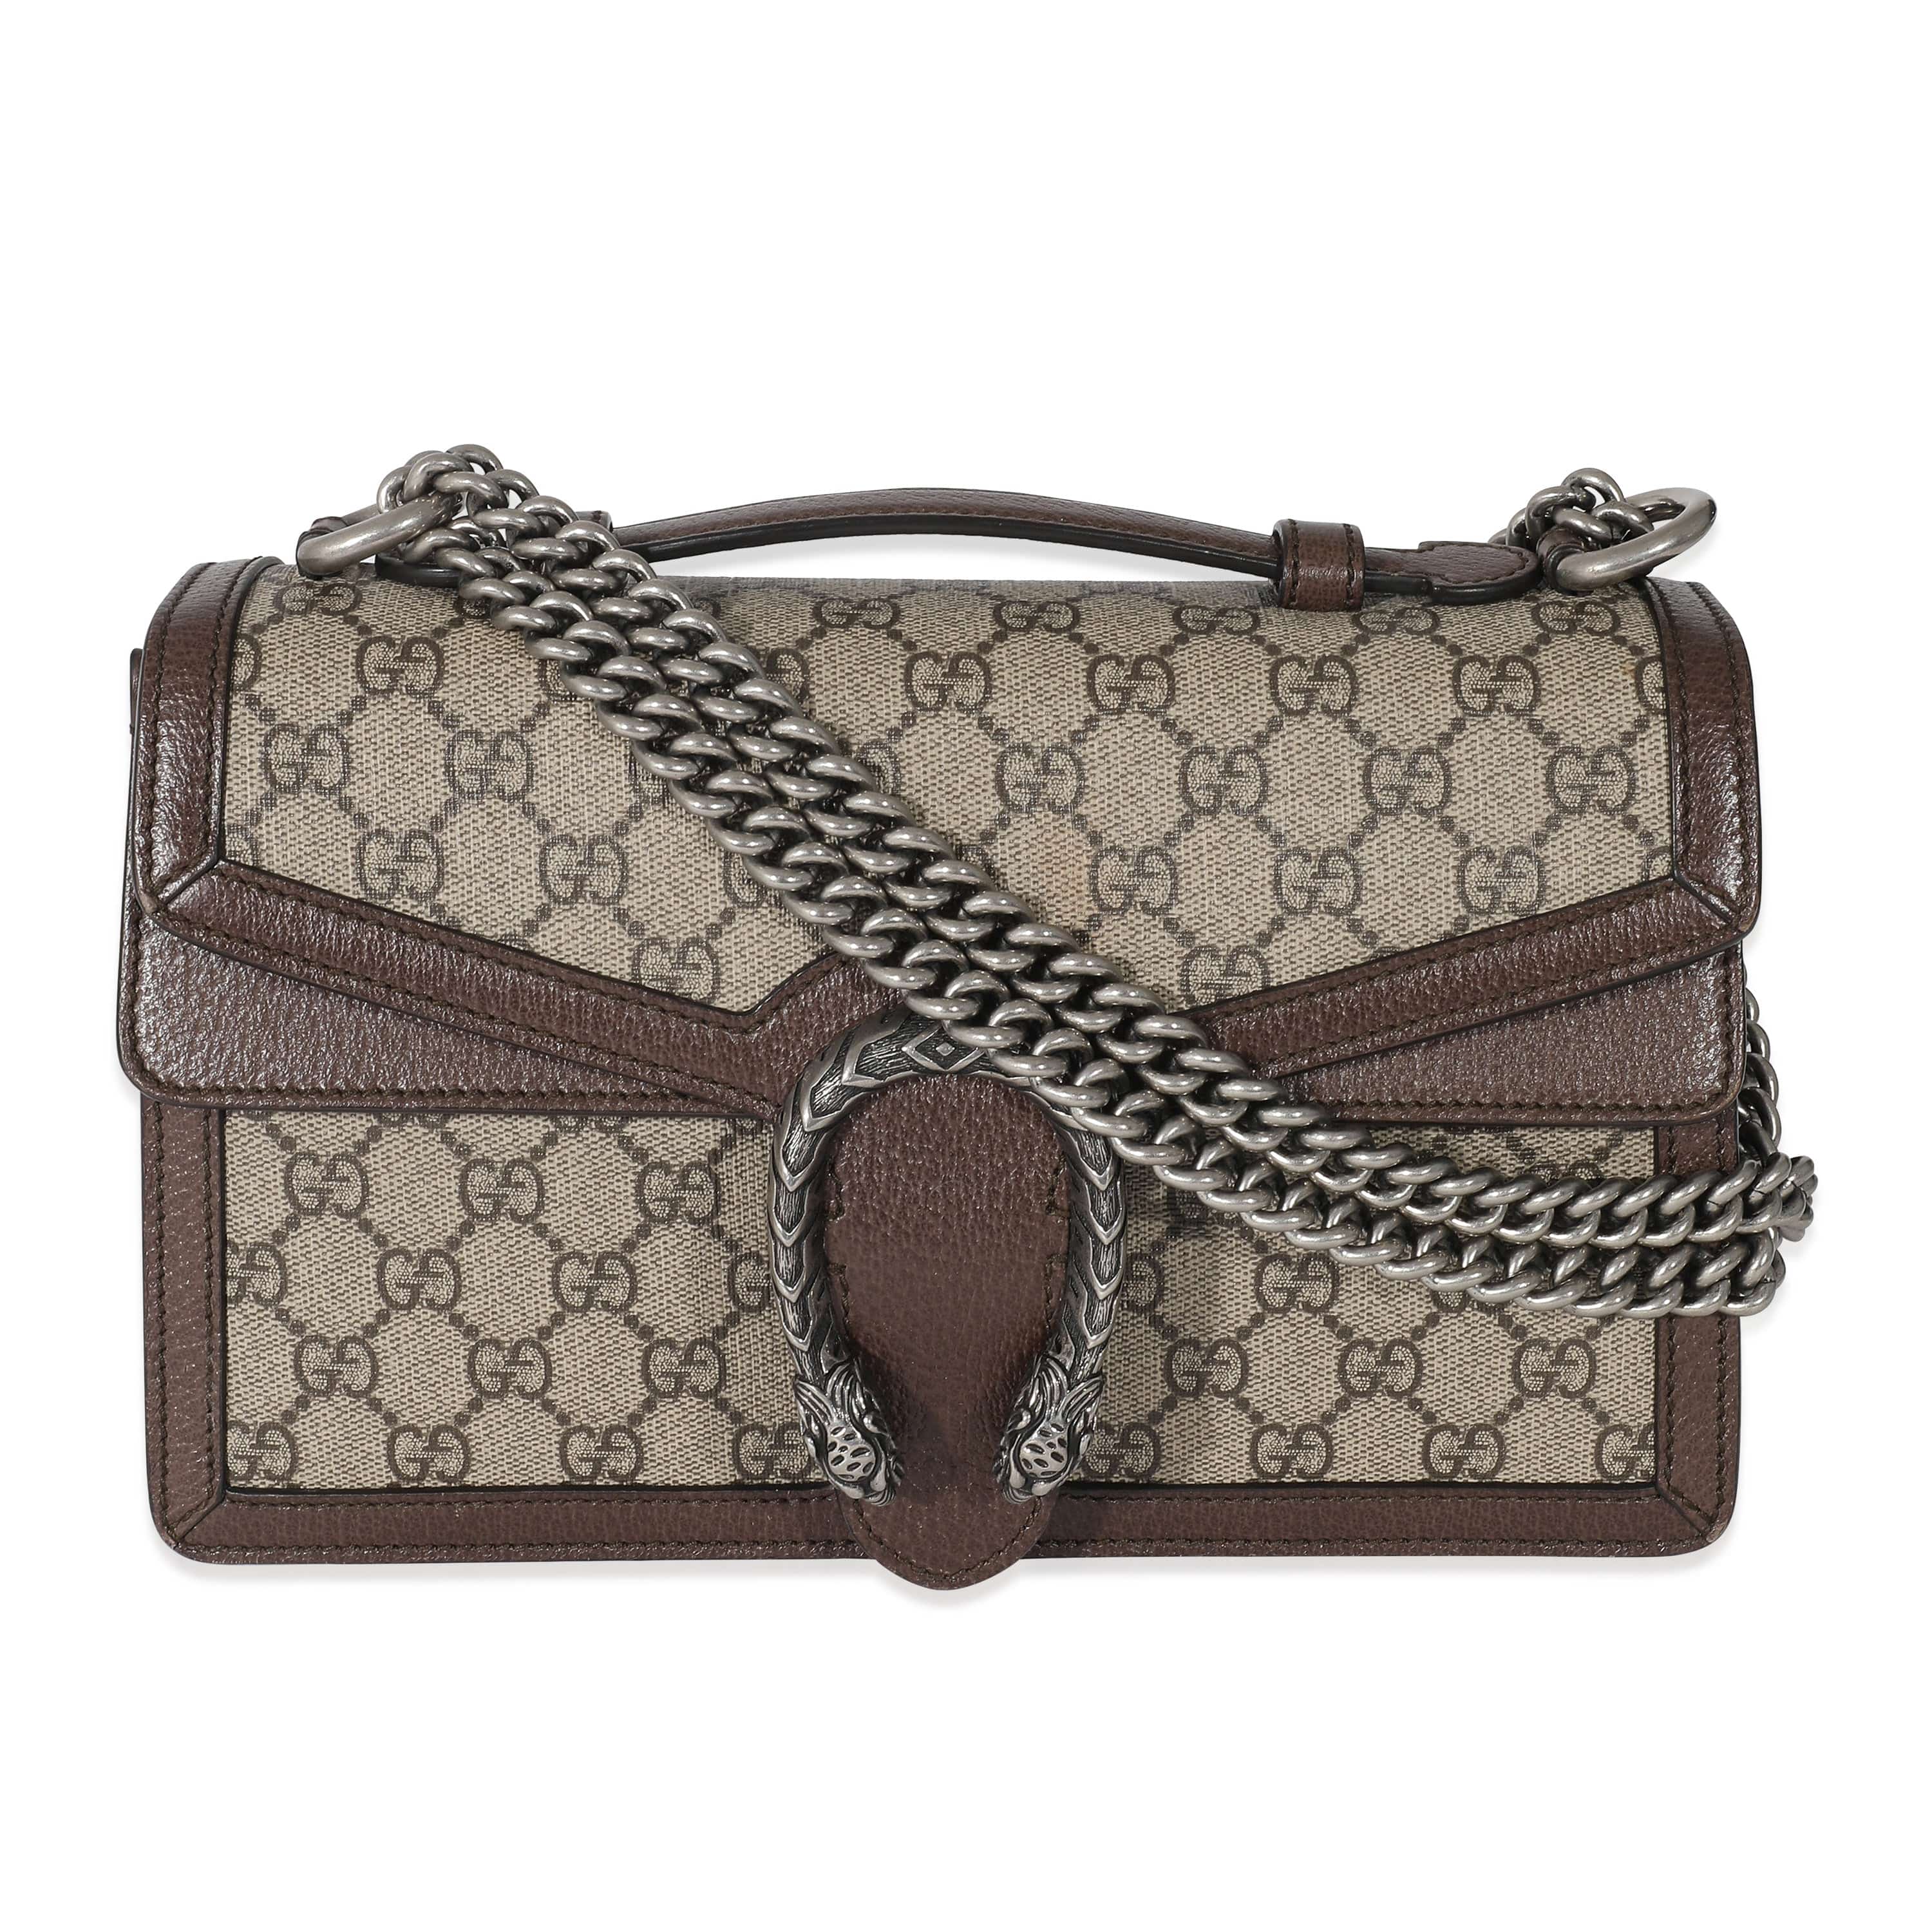 Gucci Gucci Beige GG Supreme Canvas Small Dionysus Top Handle Bag